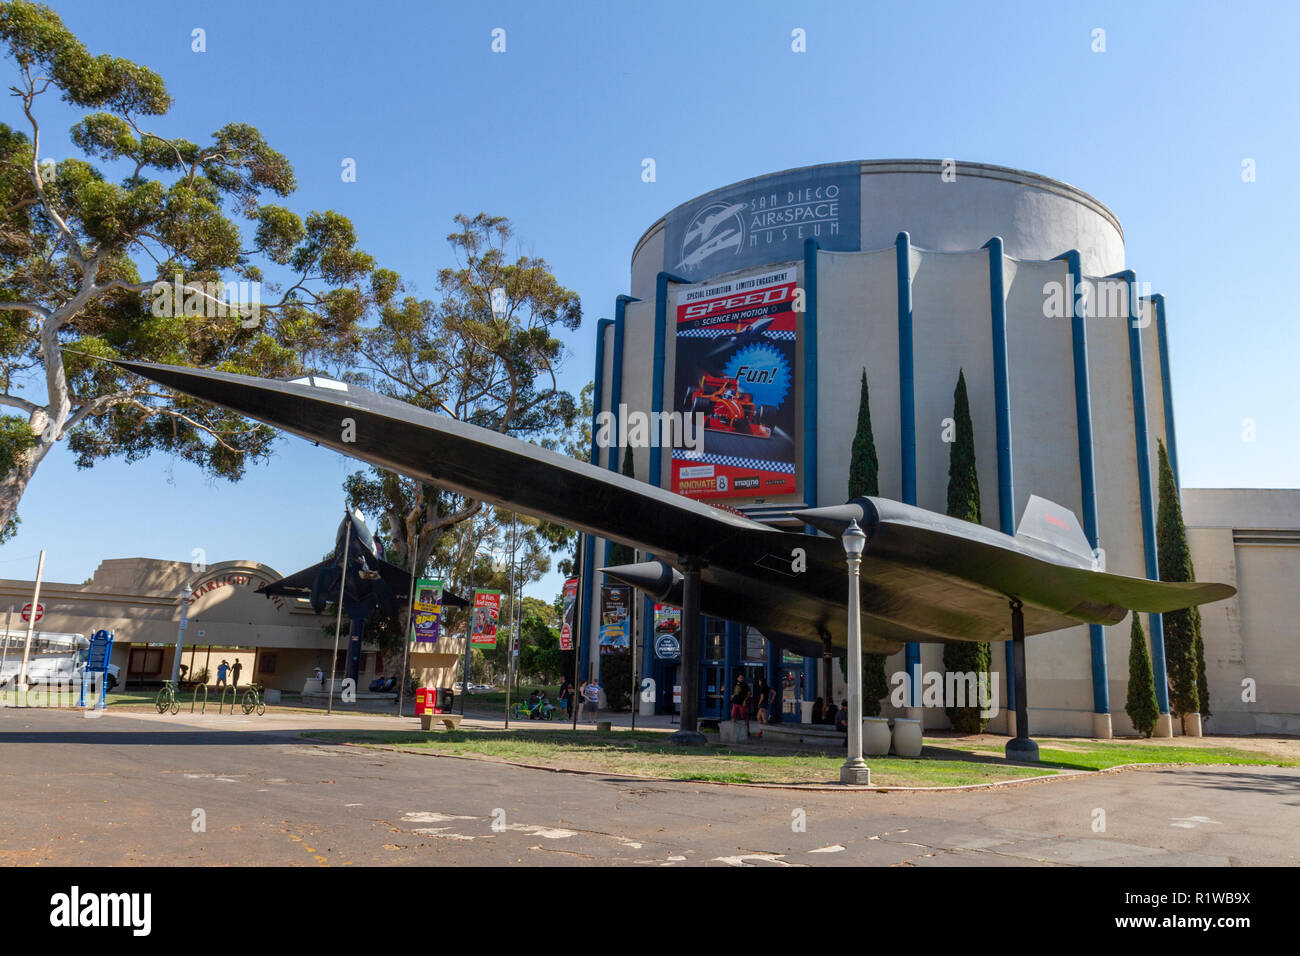 Die San Diego Air & Space Museum, Balboa Park, San Diego, California, United States. Stockfoto